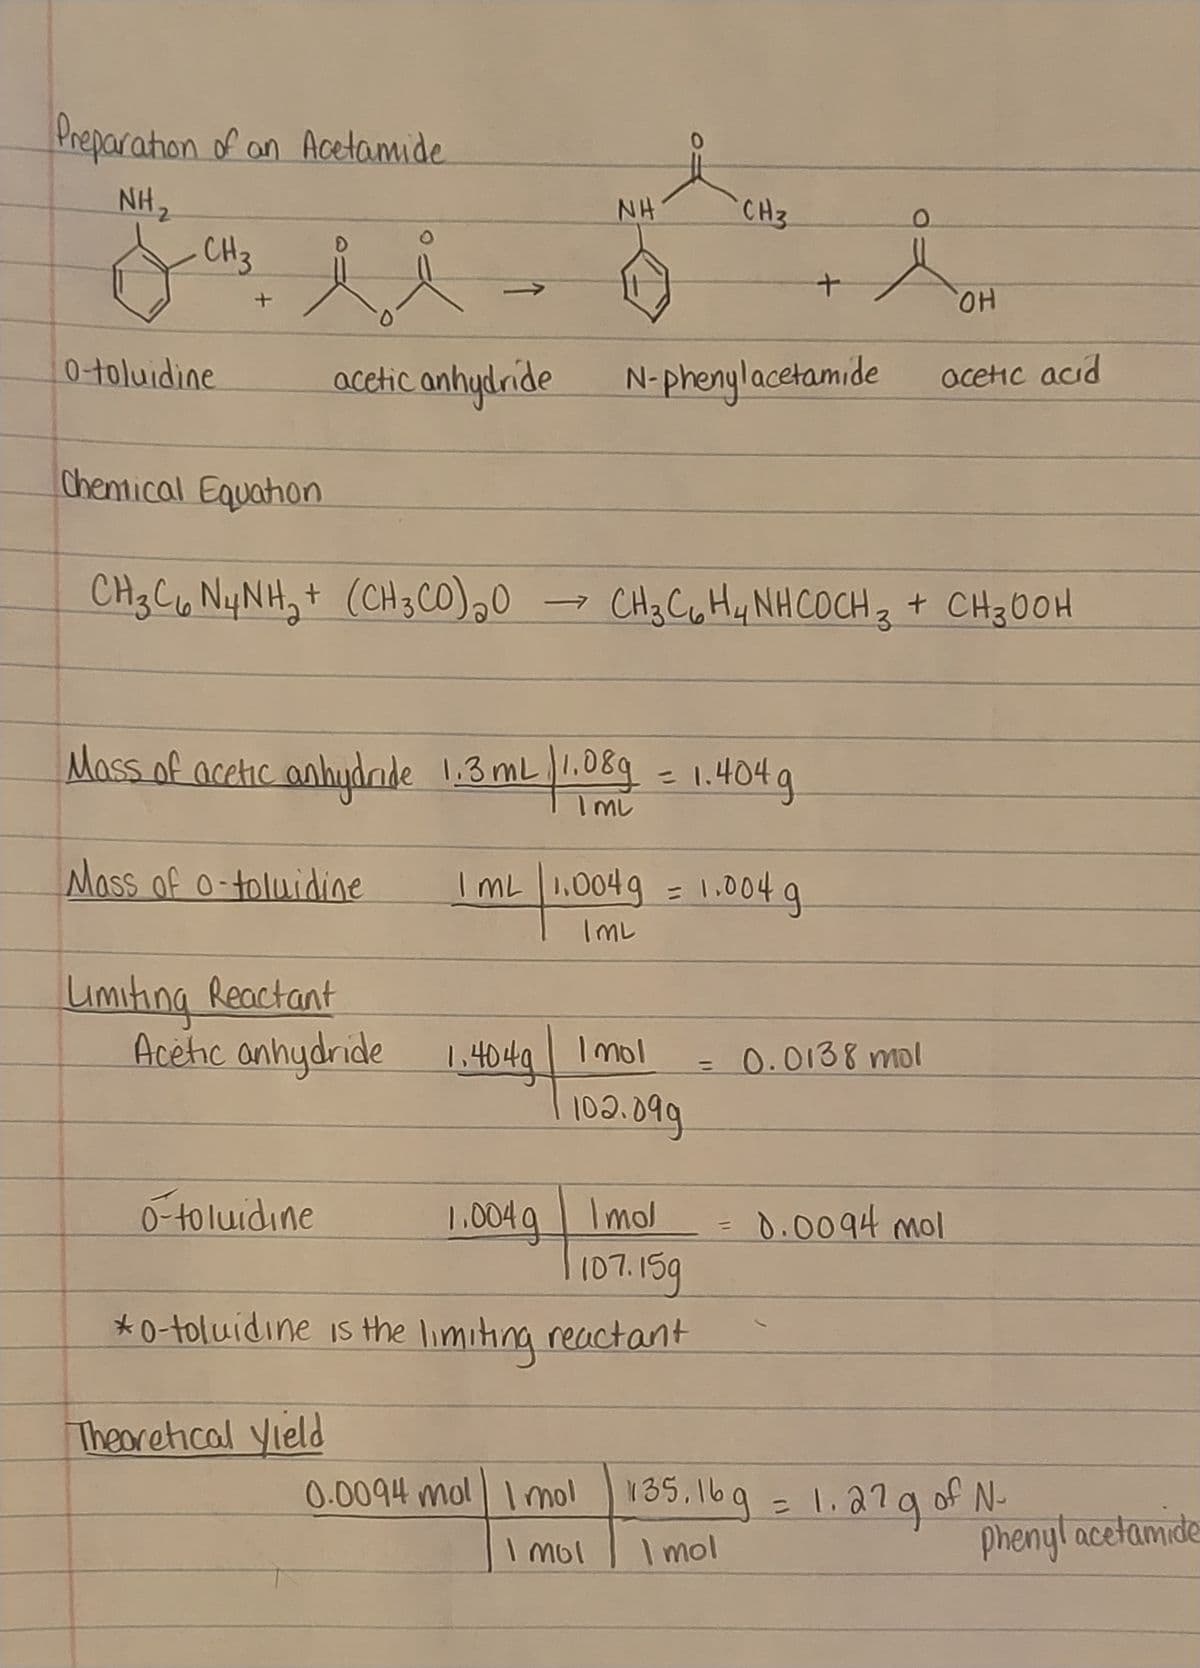 Preparation of an Acetamide.
NH ₂
CH3
0-toluidine
+
Chemical Equation
O
CH3C N4NH₂+ (CH3CO) 20
acetic anhydride
o-toluidine
Acetic anhydride 1.4049
Theoretical Yield
-
ΝΗ
Mass of acetic anhydride 1.3mL | 1.08g = 1.404g
IML
Mass of o-toluidine
Limiting Reactant
N-phenylacetamide
1m² | 1.0049 = 1.004 g.
IML
CH3
Imol
102.099
CH3C6H4NHCOCH3 + CH300H
1.004g Imol
107.159
*0-toluidine is the limiting reactant
+
=
i
он
acetic acid
0.0138 mol
0.0094 mol
0.0094 mol 1 mol 135, 16g = 1.27 g of N-
1 mol
I mol
Phenyl acetamide